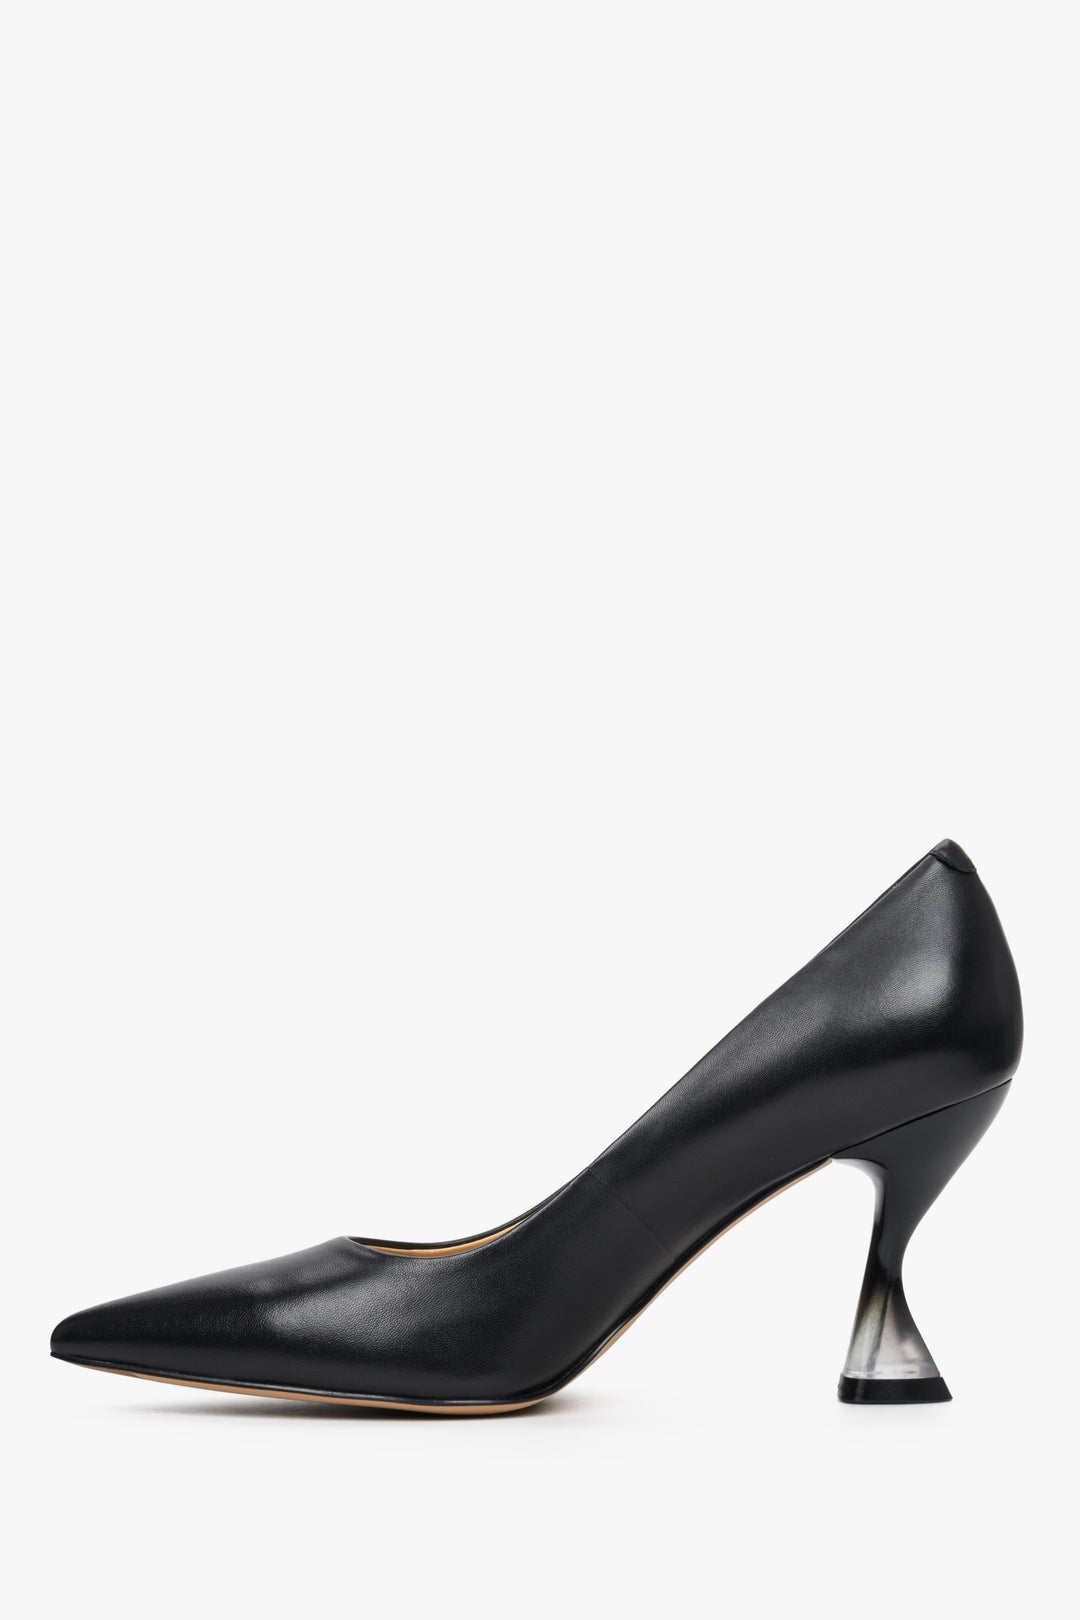 Black leather Estro women's high-heeled pumps - shoe profile.